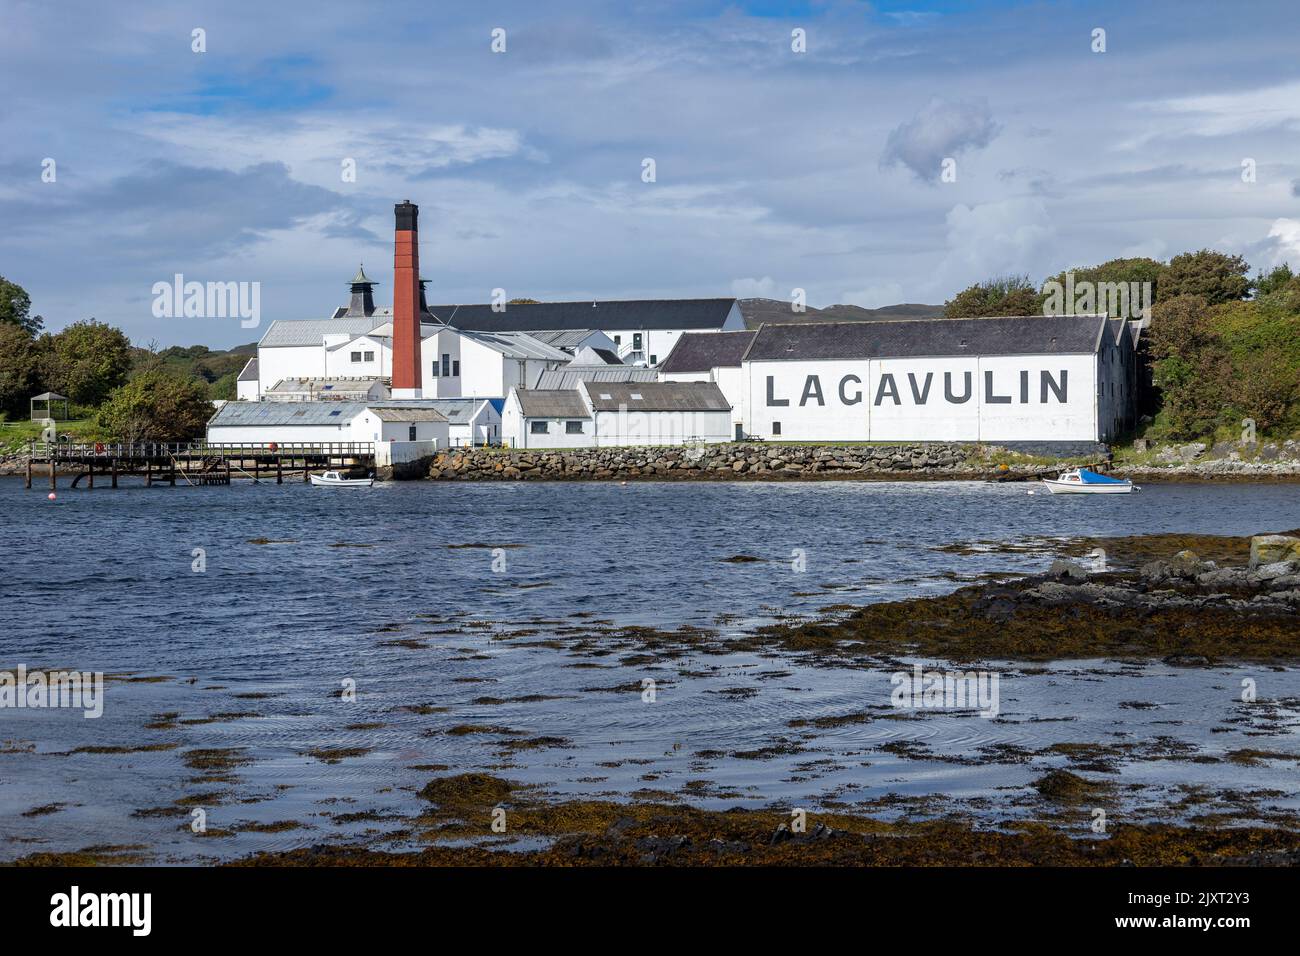 Lagavulin distillery on the Scottish island of Islay, famous for its peaty whiskies Stock Photo